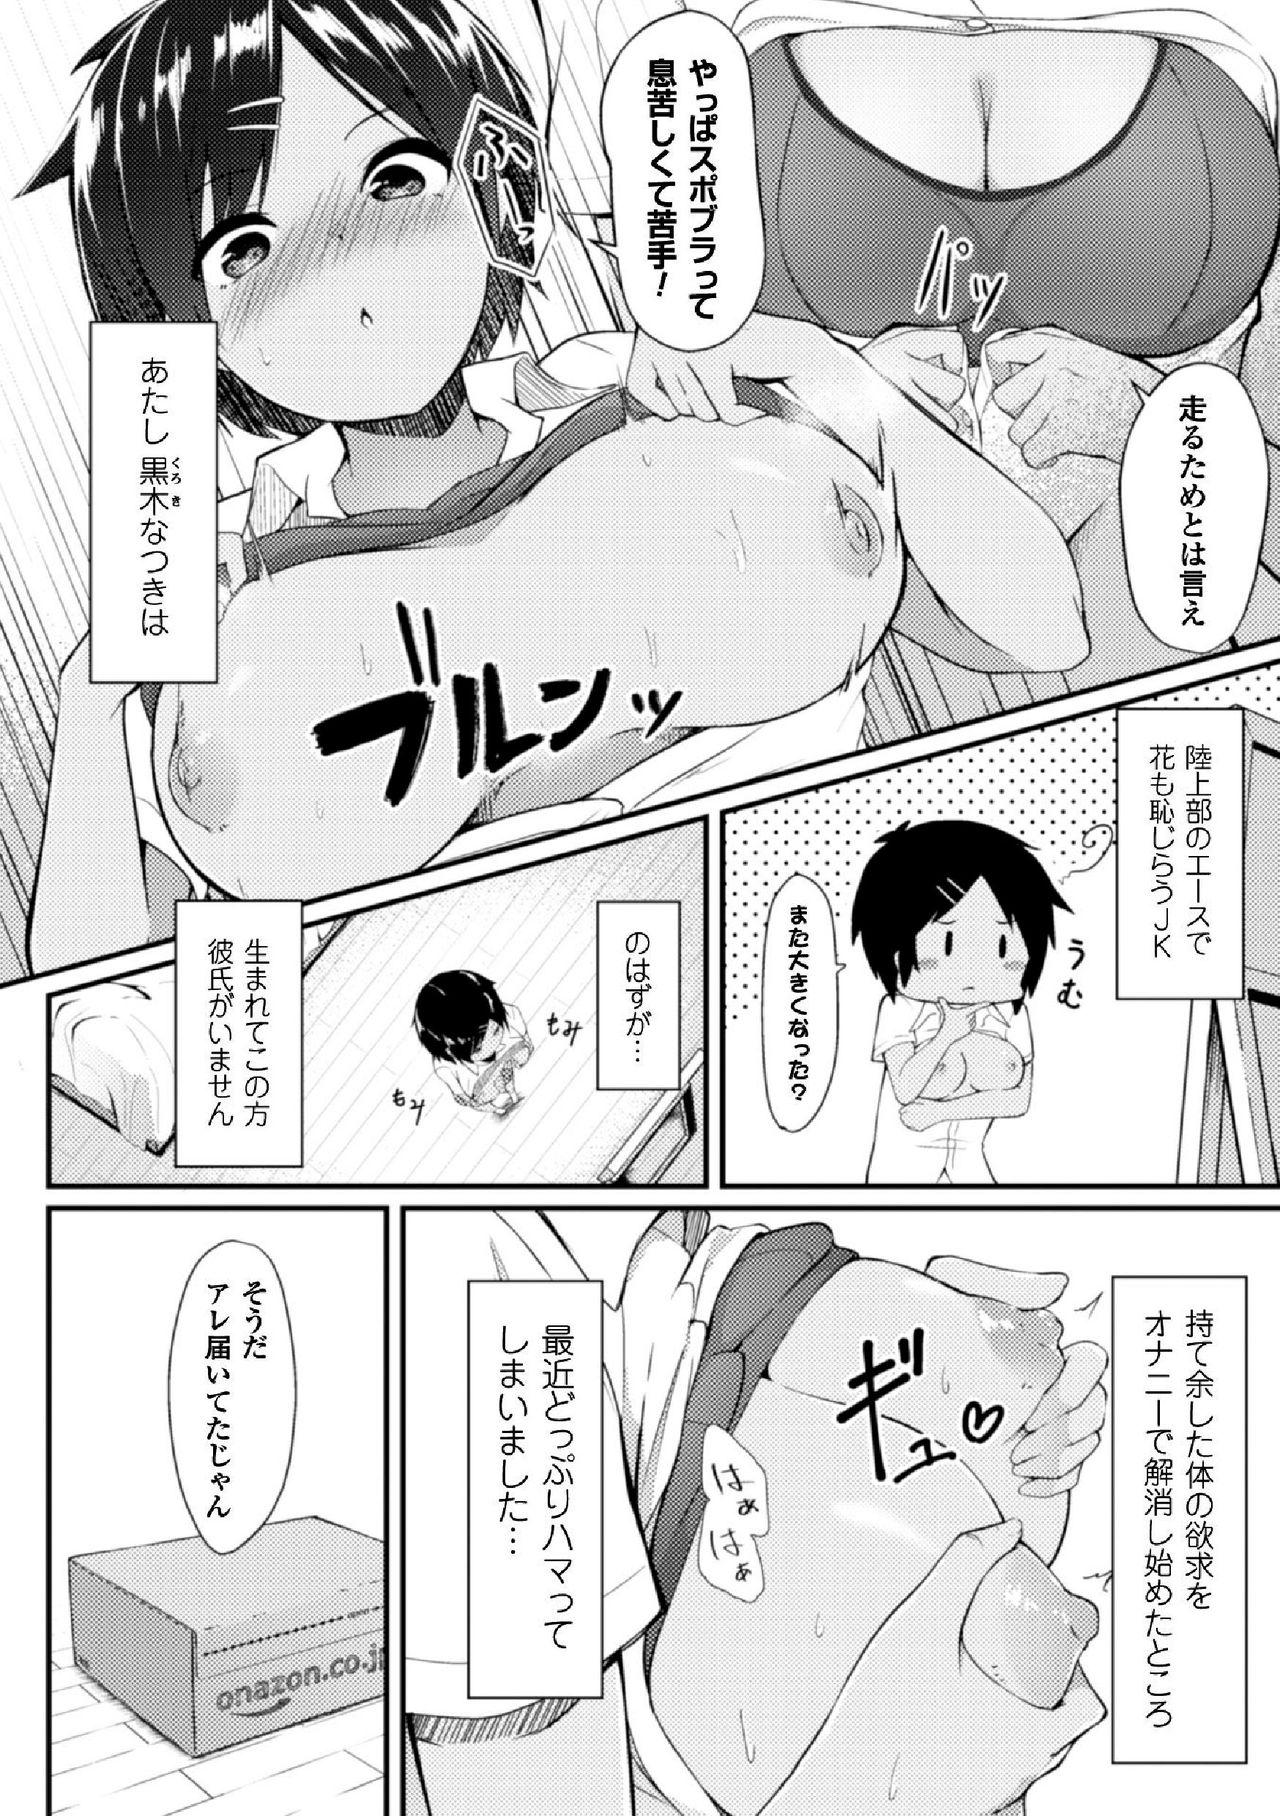 2D Comic Magazine TS Jibun Heroine mou Hitori no Ore ga Erosugite Gaman Dekinee! Vol. 2 63